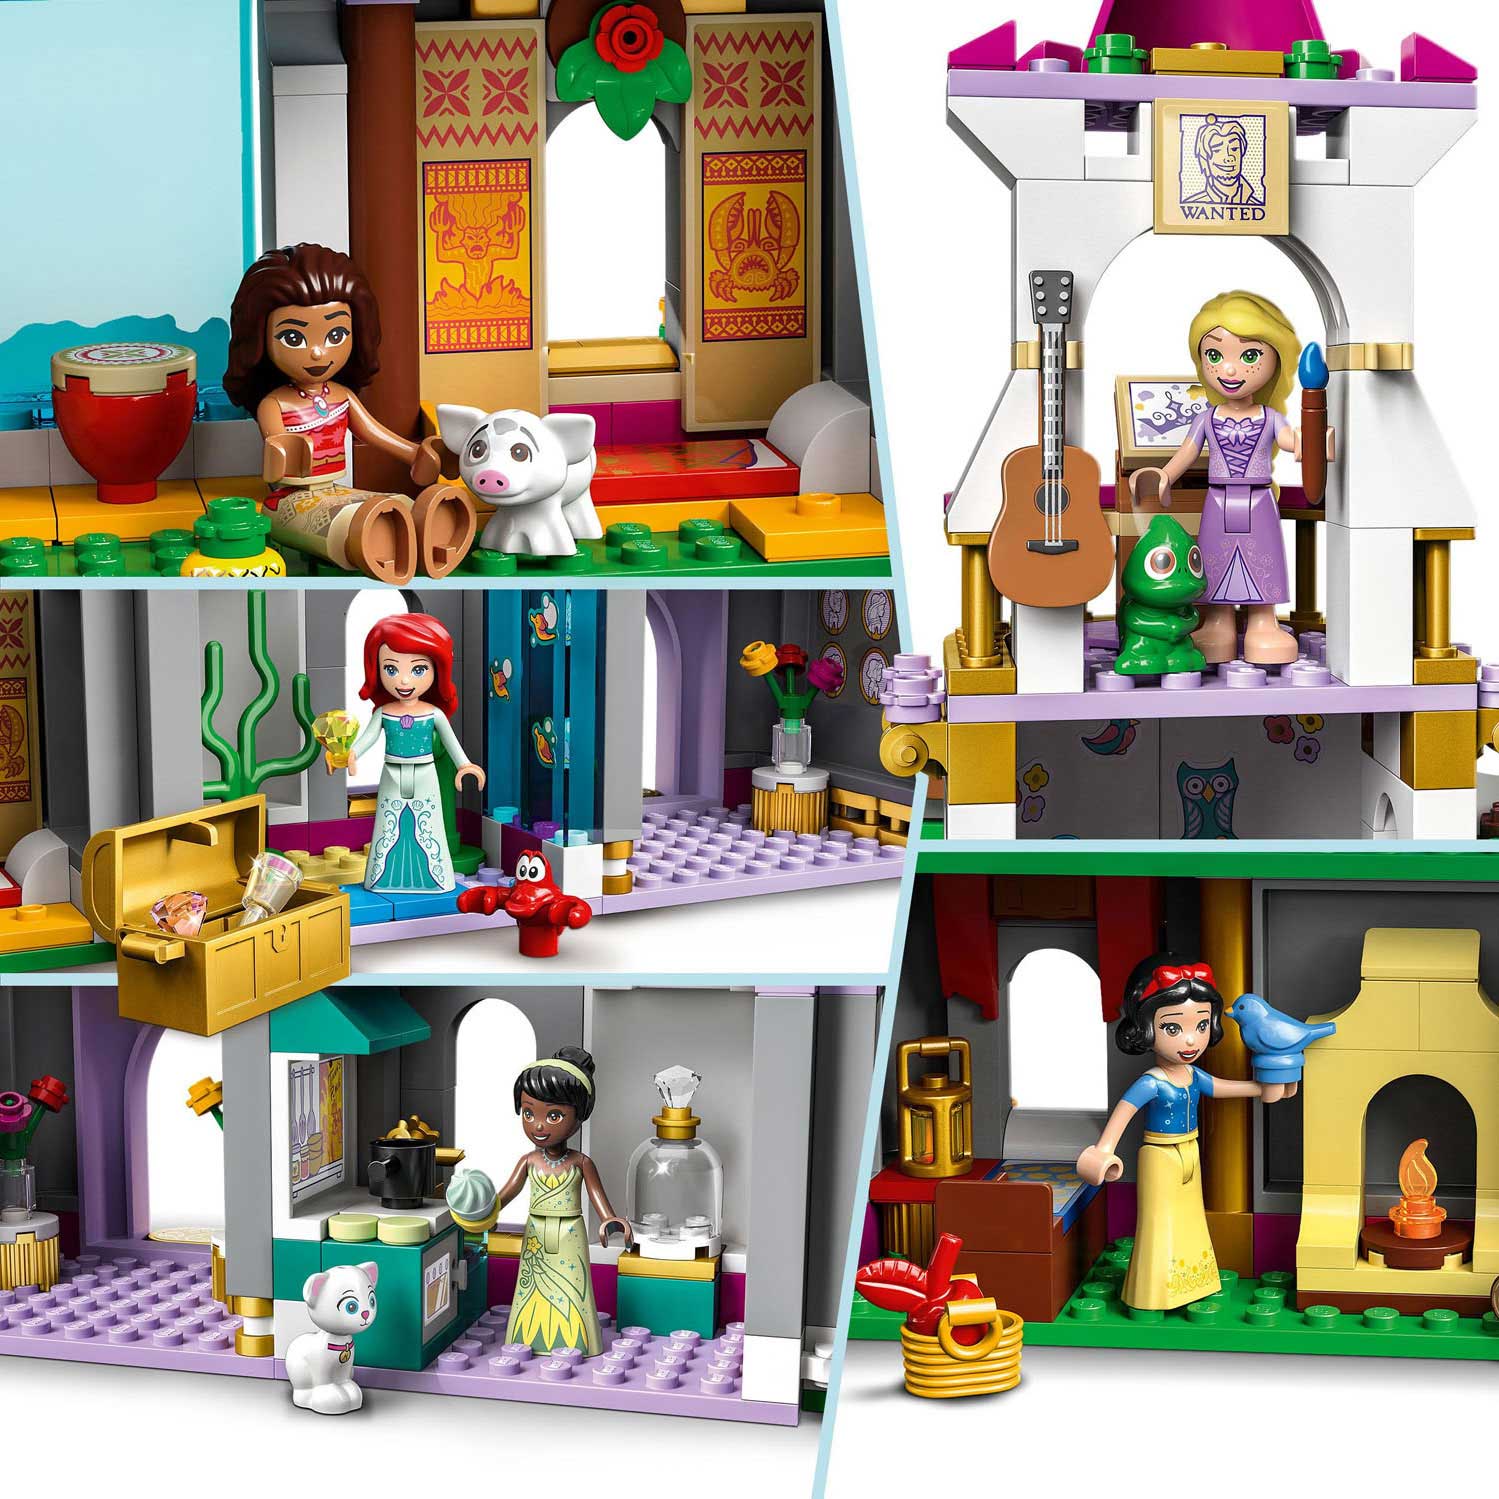 LEGO Princesse Disney 43205 Le château d'aventure ultime